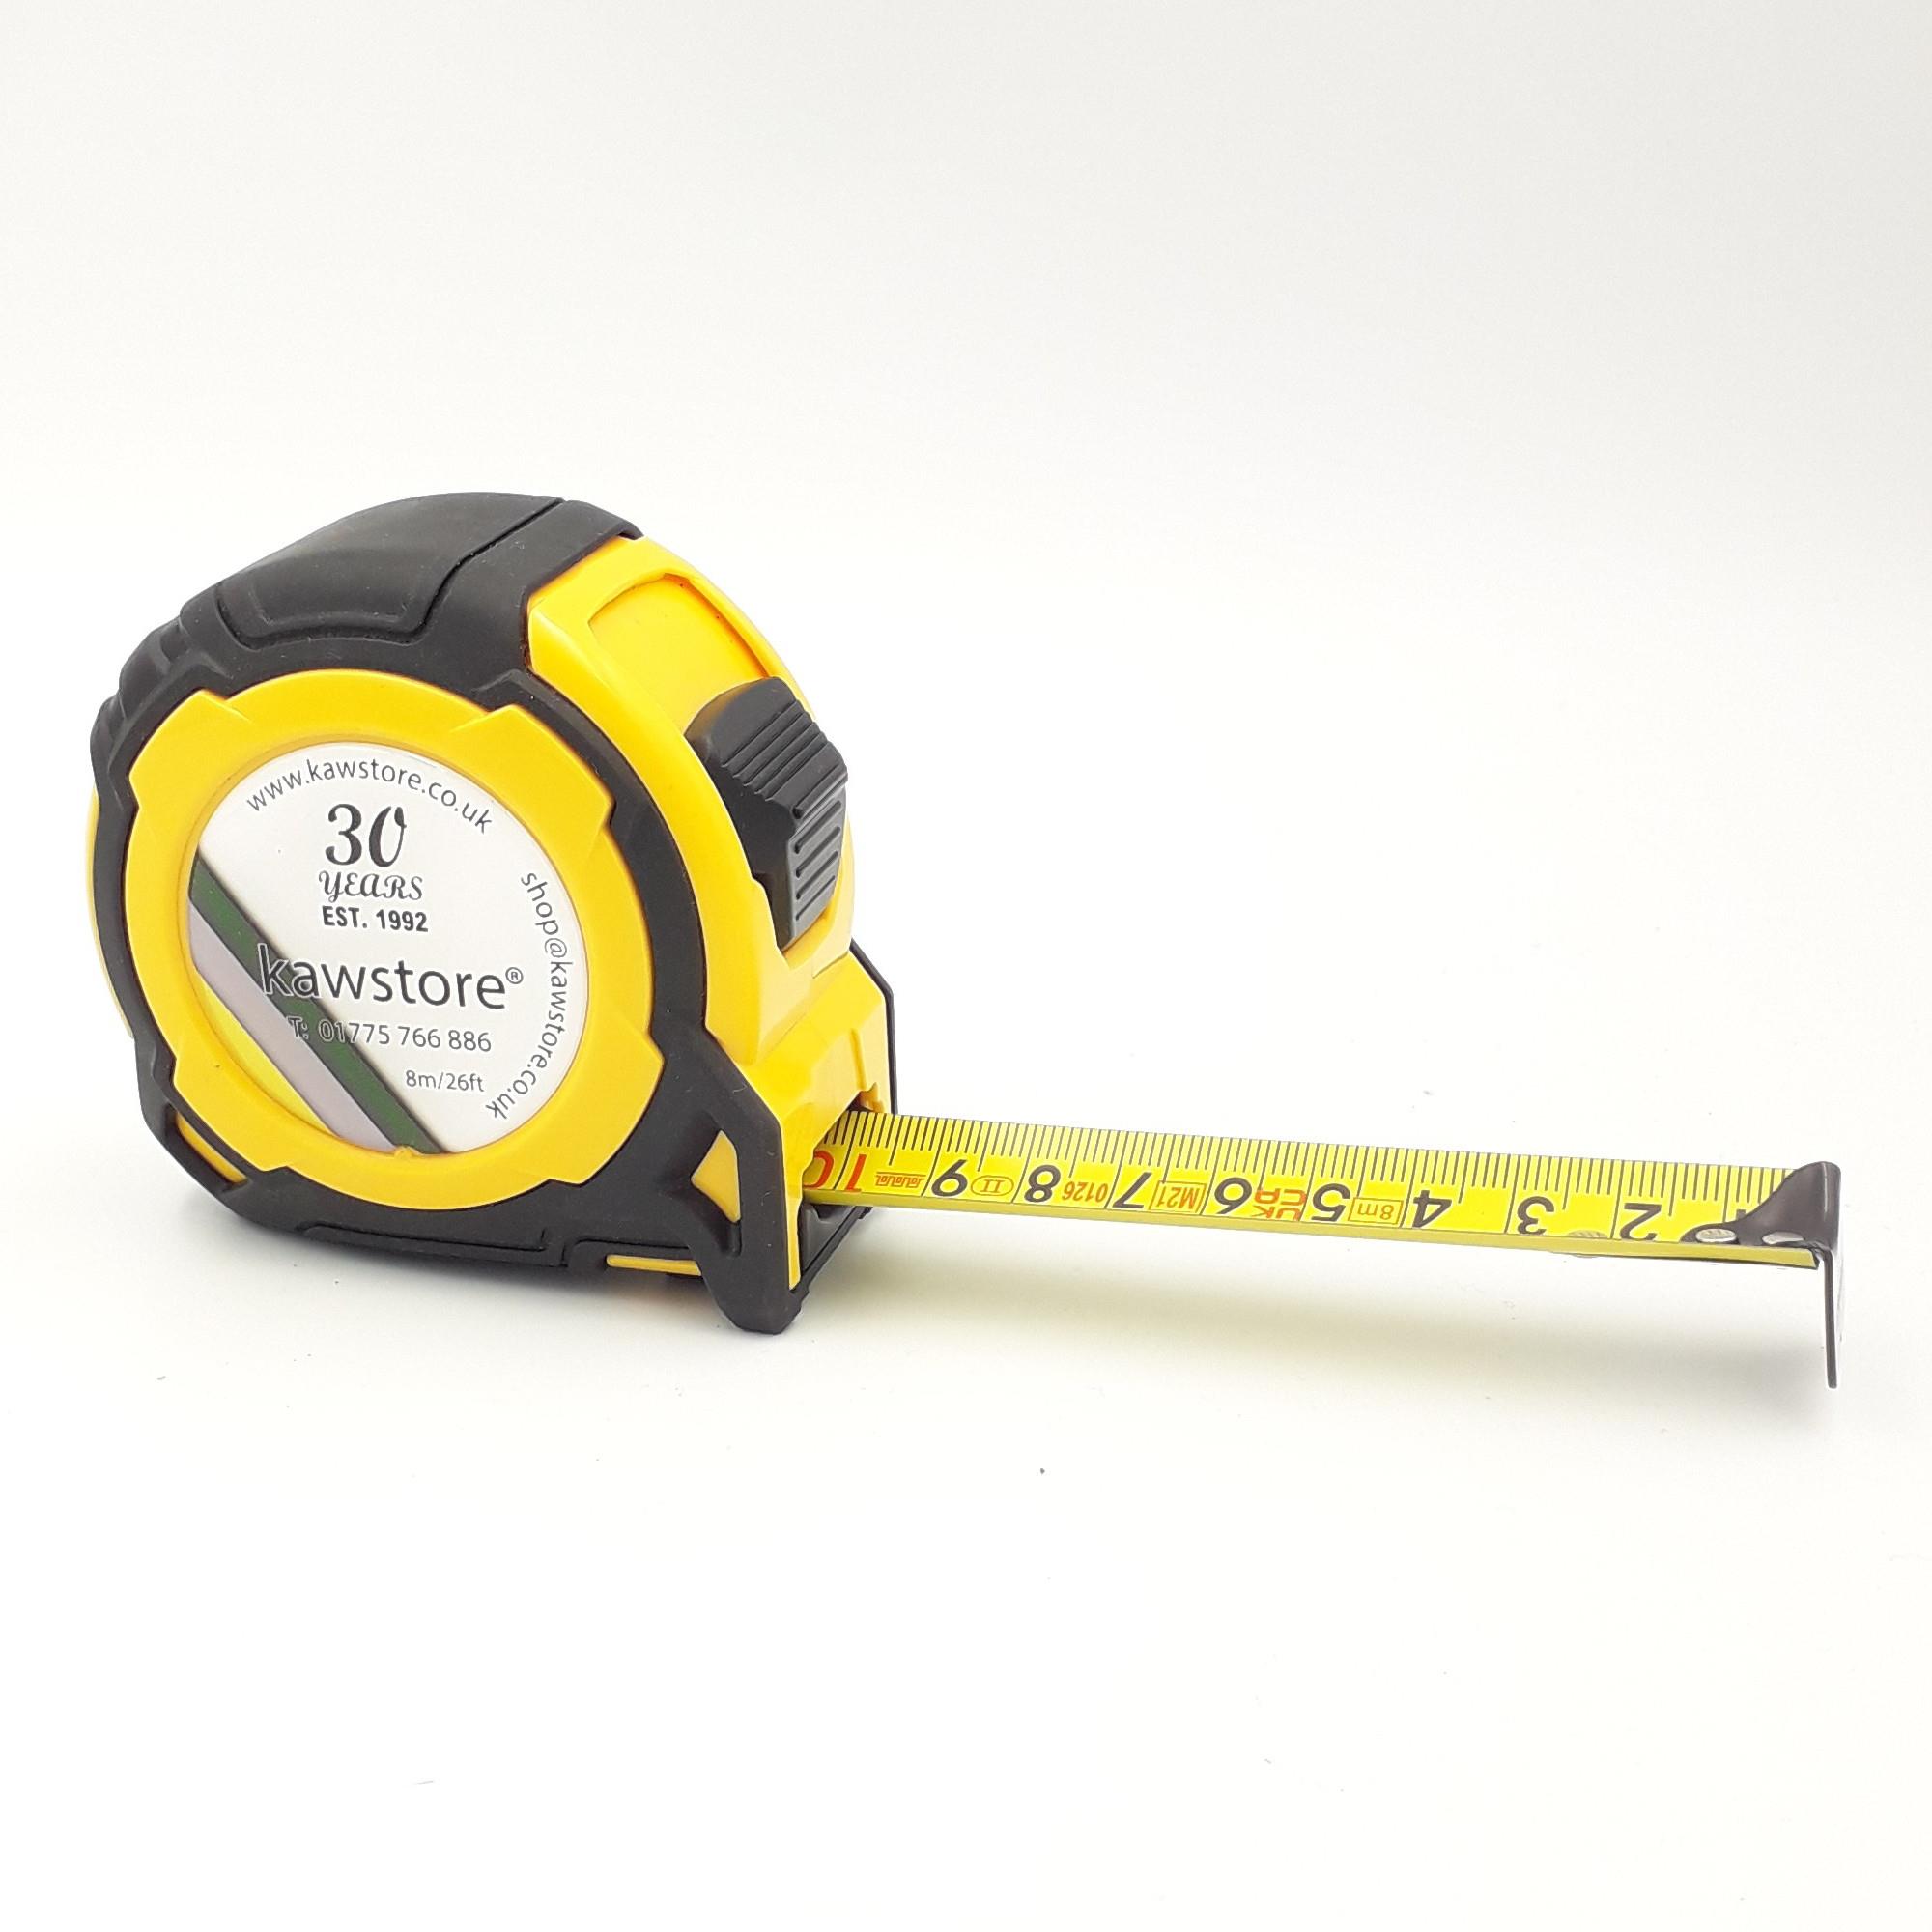 kawstore Fan Tape Measure; Yellow/Black (YEL) (BK); 8m/26ft; 30 YEAR EDITION